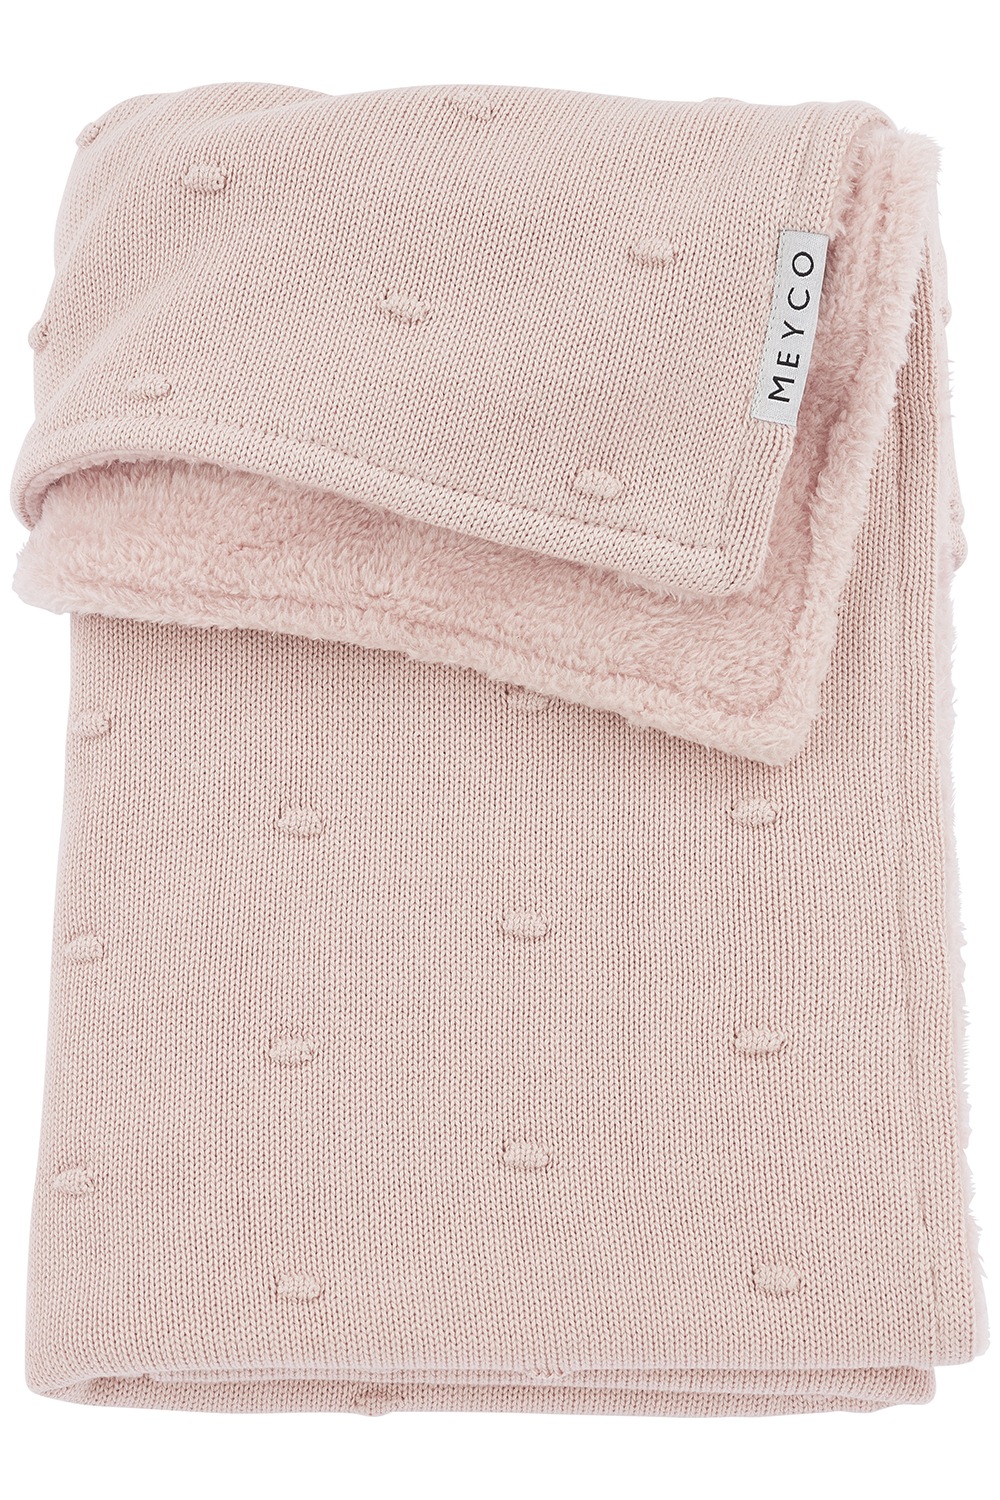 Ledikant deken Mini Knots teddy - soft pink - 100x150cm